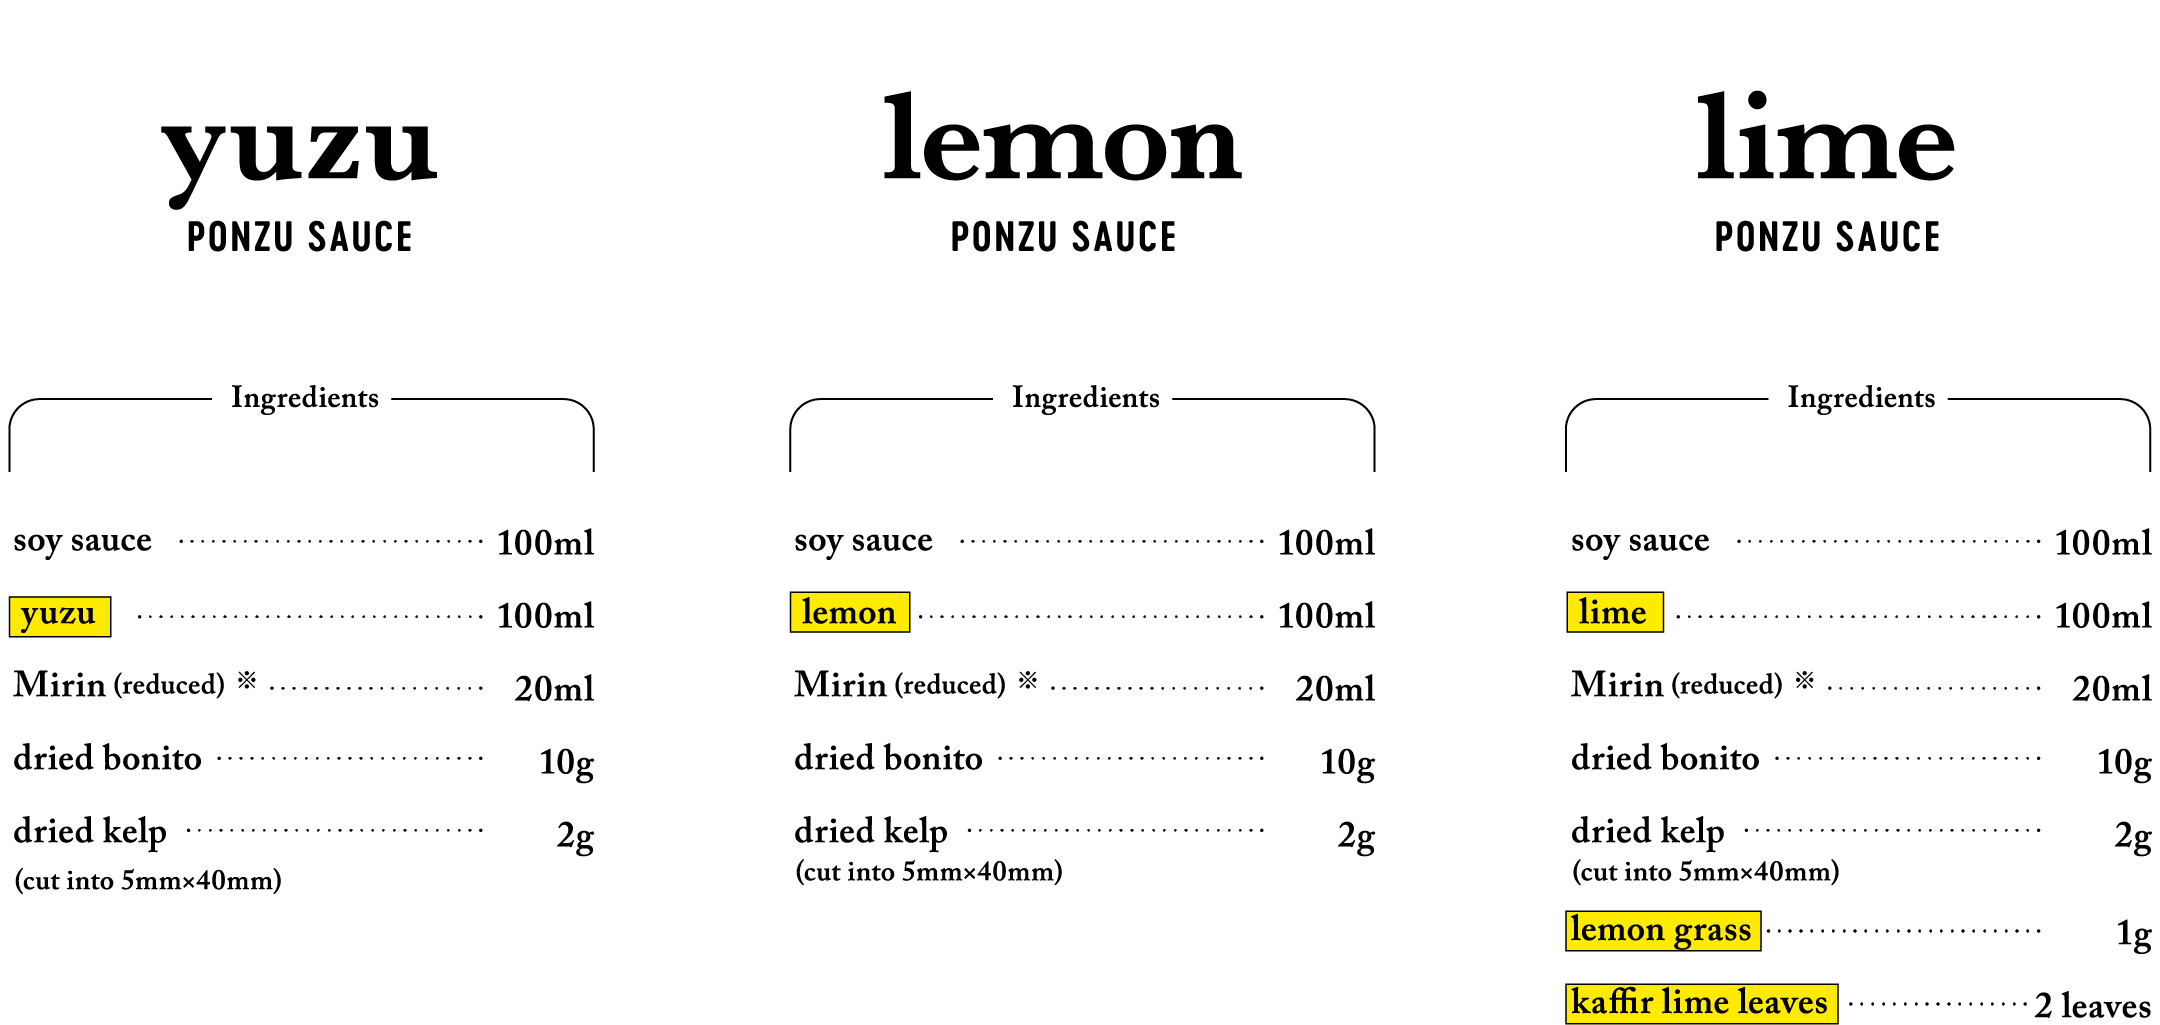 lime PONZU SAUCE lemon PONZU SAUCE yuzu PONZU SAUCE